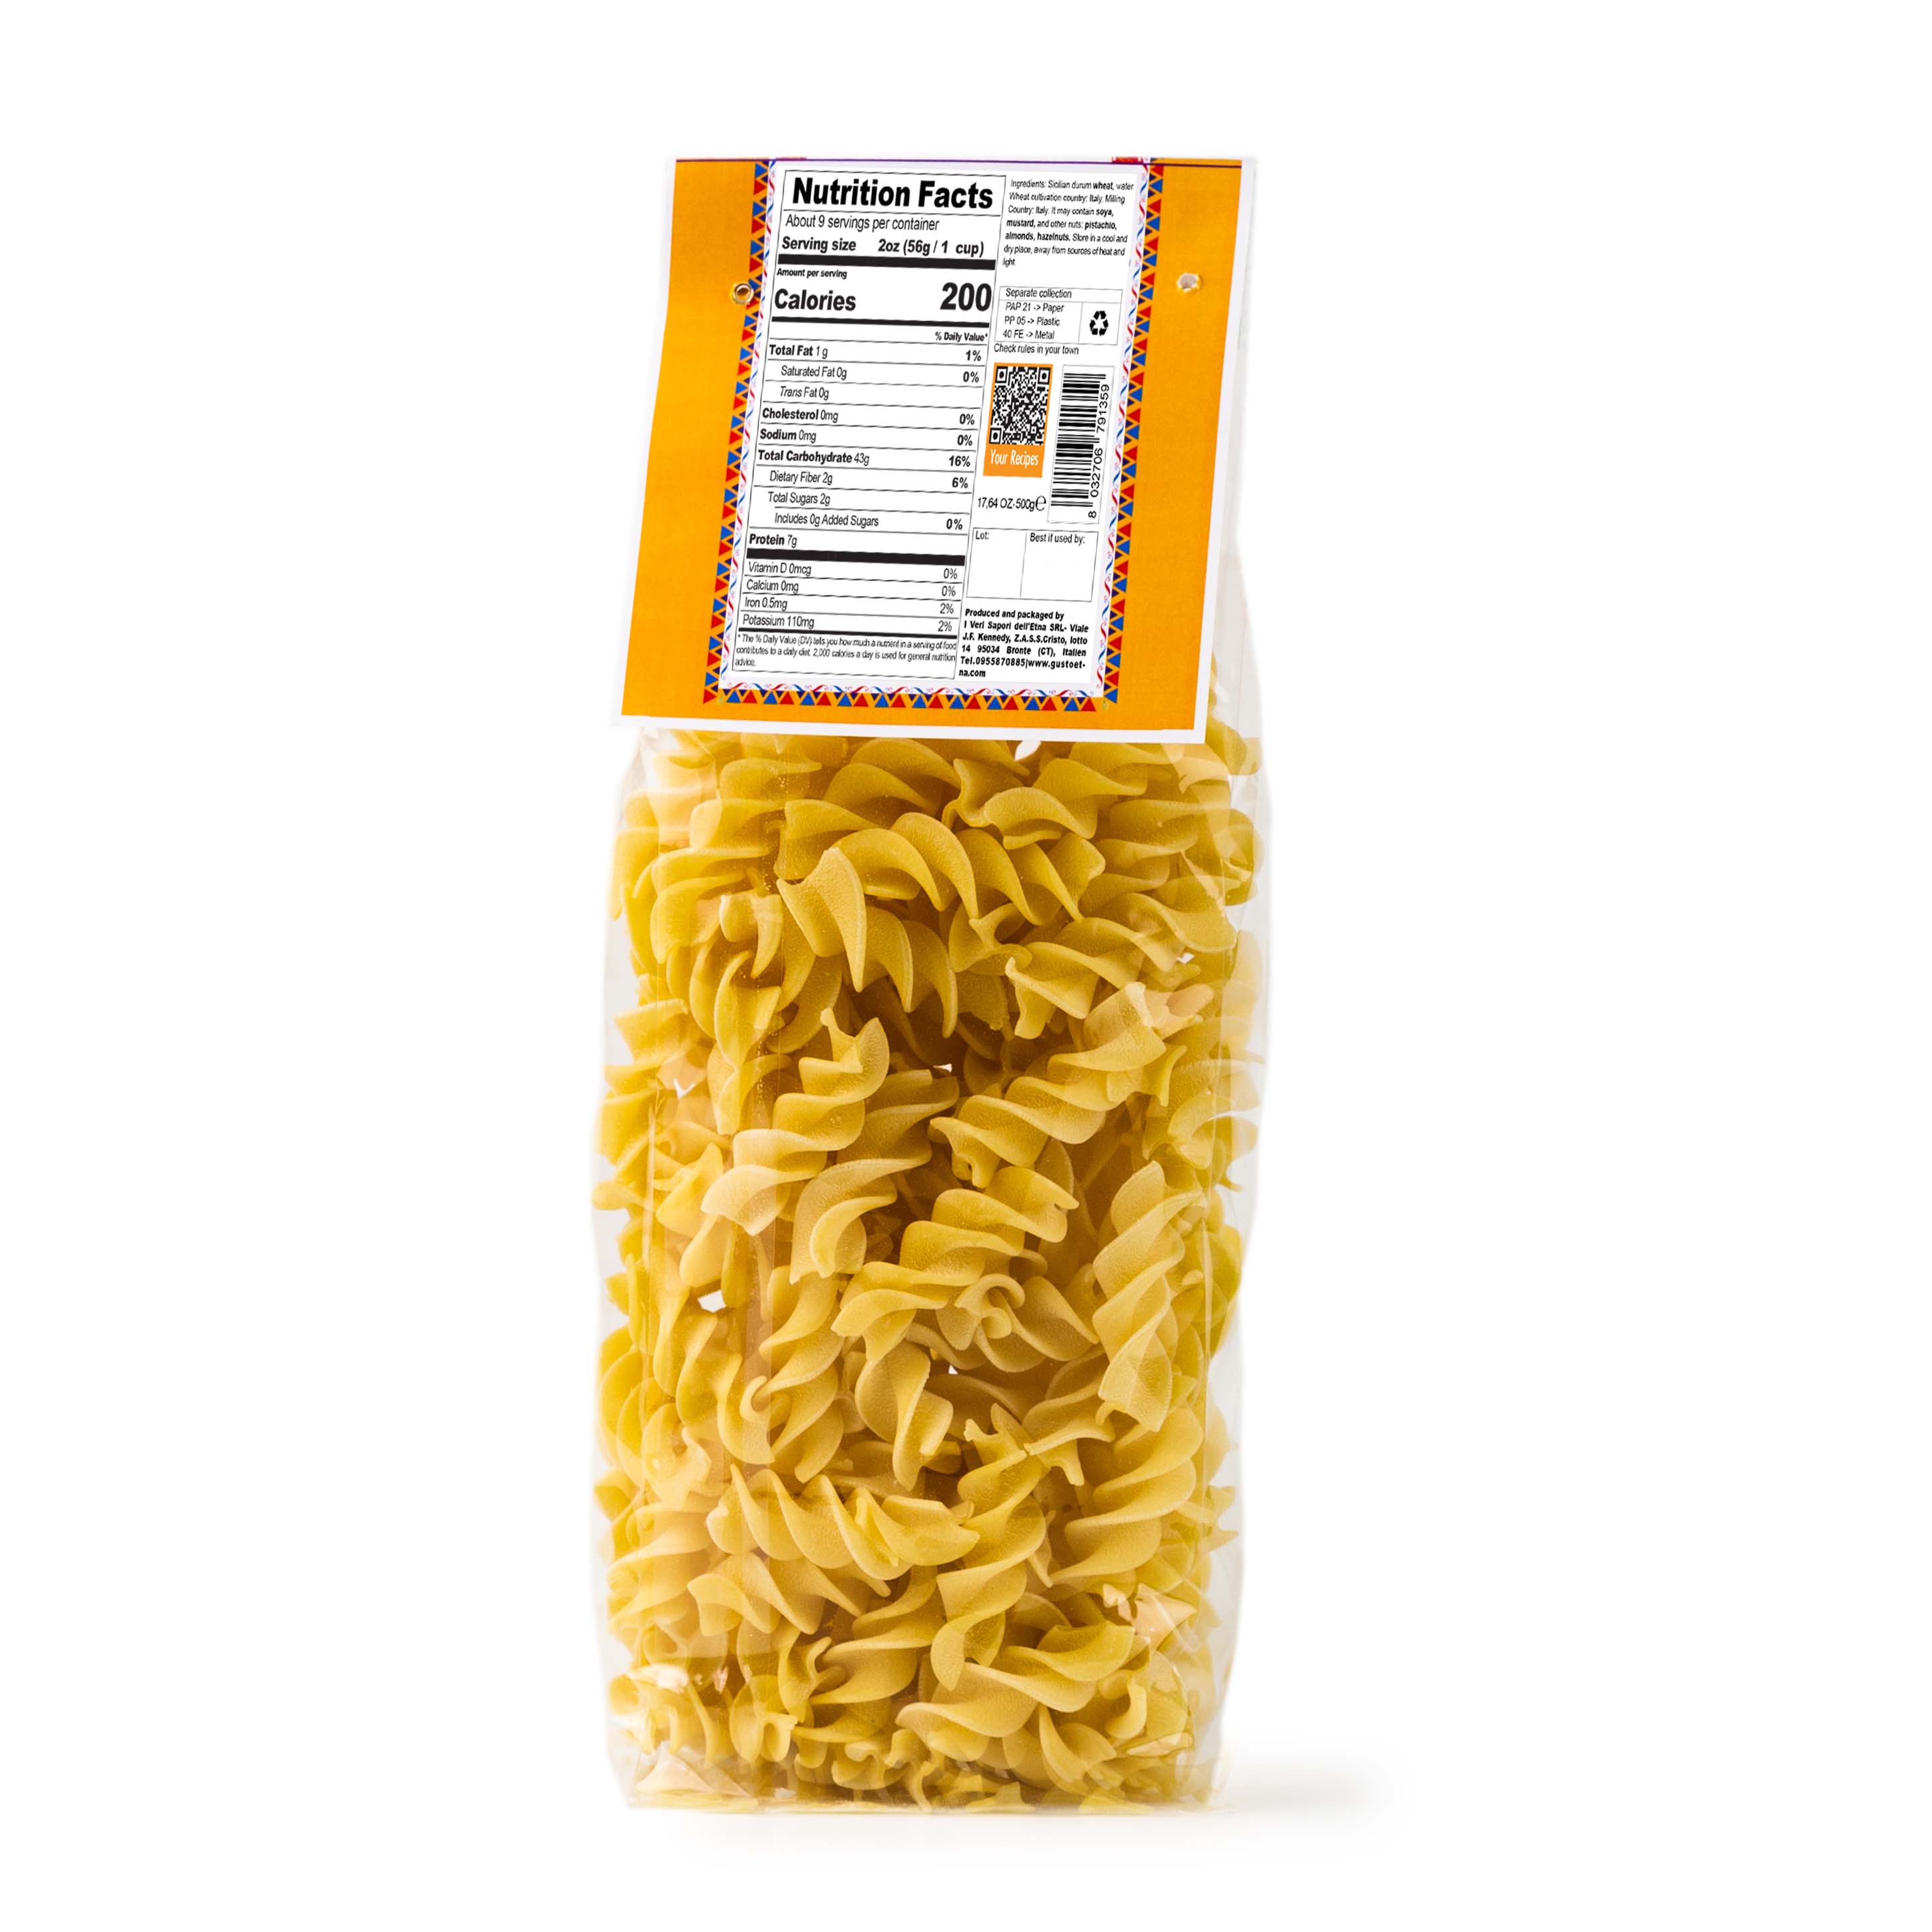 Gusto Etna, Fusilloni Pasta, 17.6 oz (500 g), Italian Fusilloni Durum Wheat Pasta, Italian pasta, Non GMO